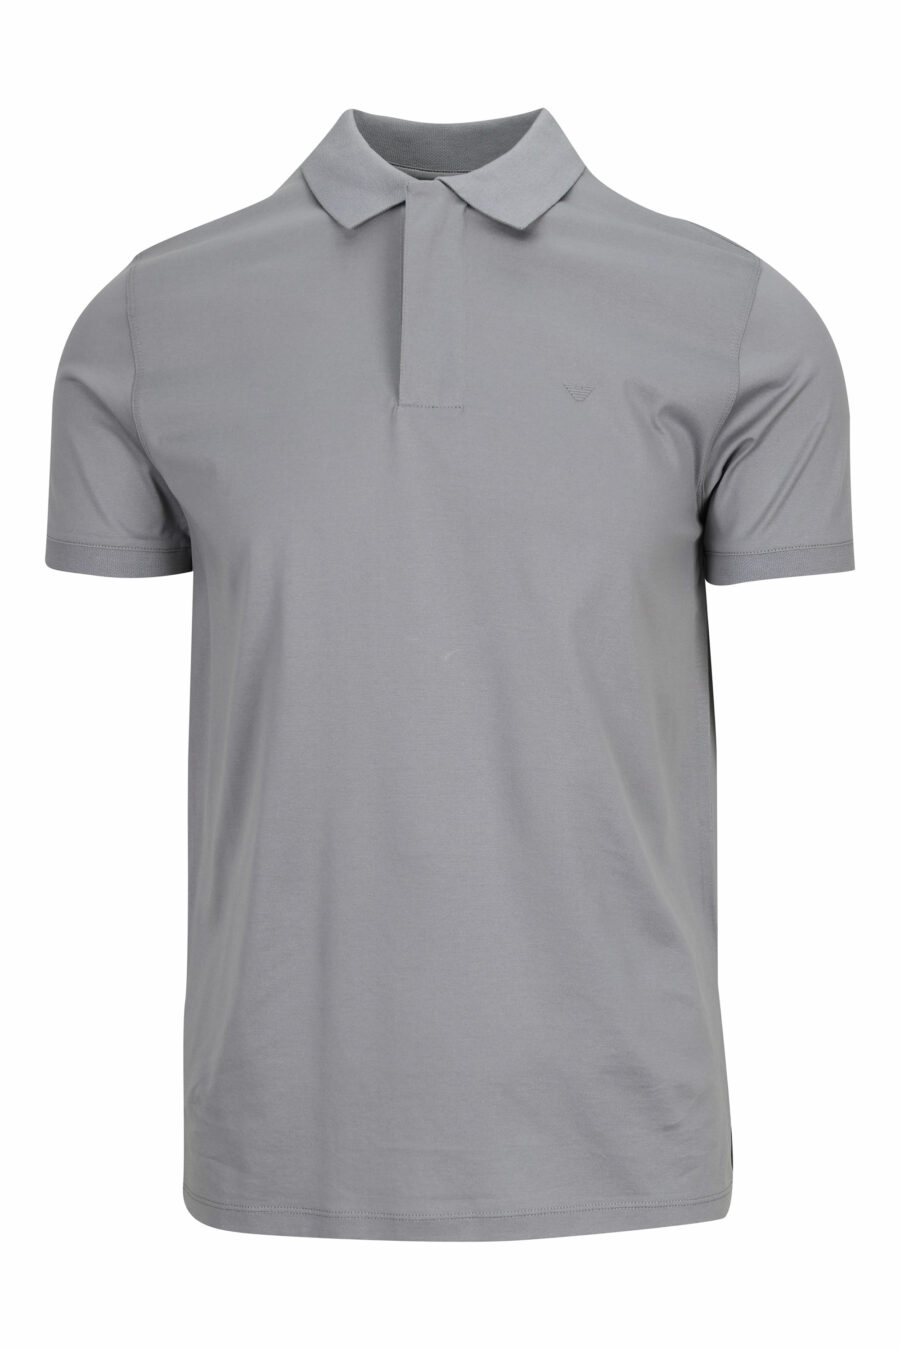 Graues Poloshirt mit monochromem Adler-Mini-Logo - 8058997613835 1